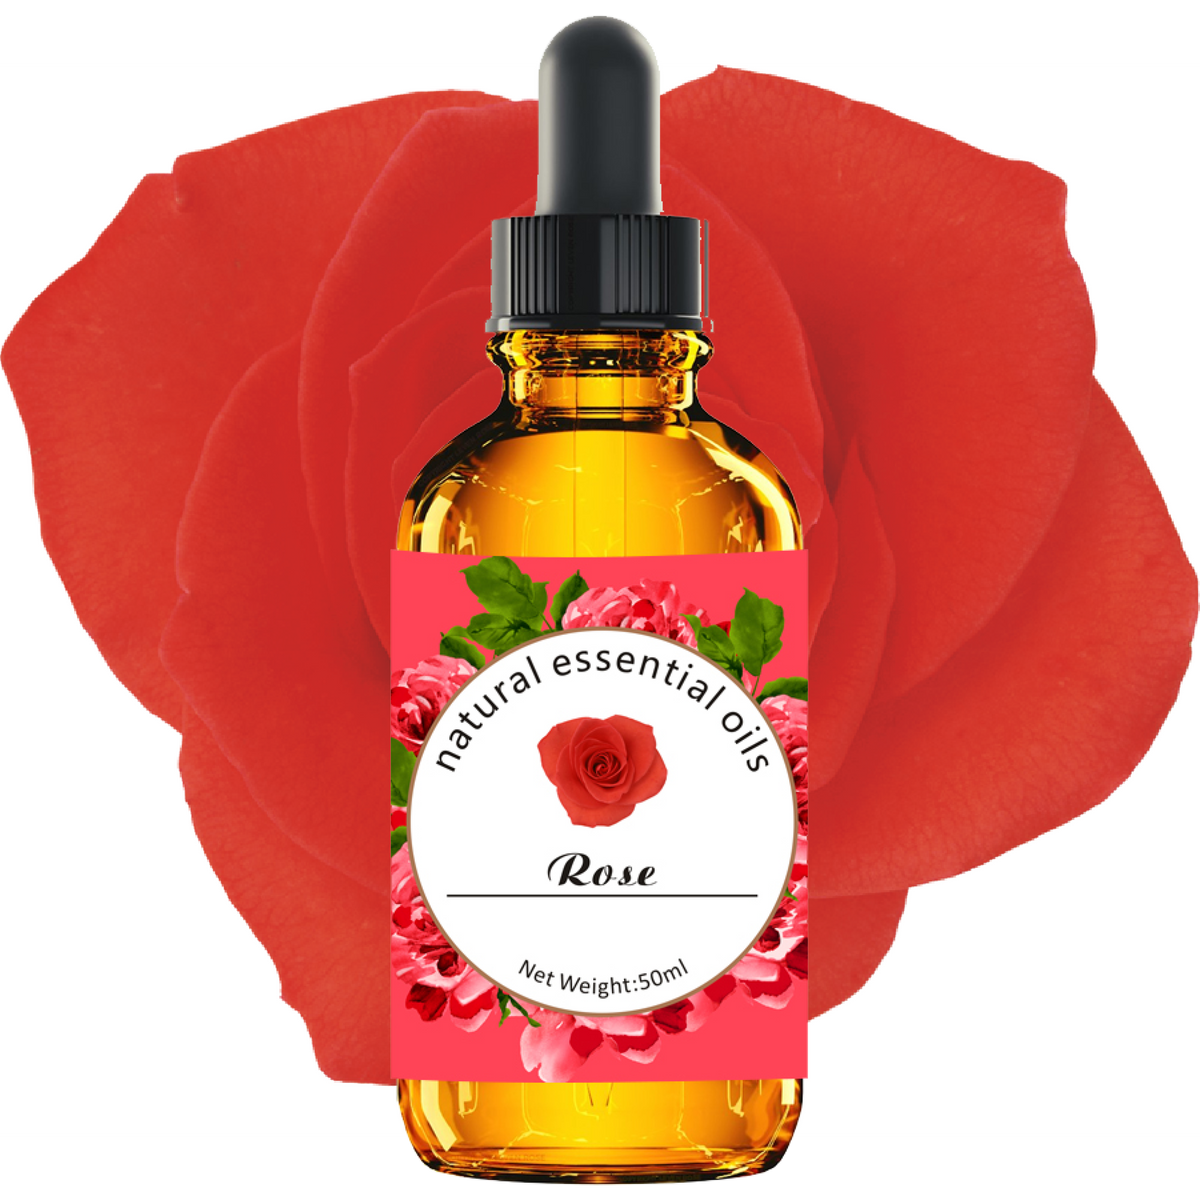 Rose - 50ml pure natural essential oil